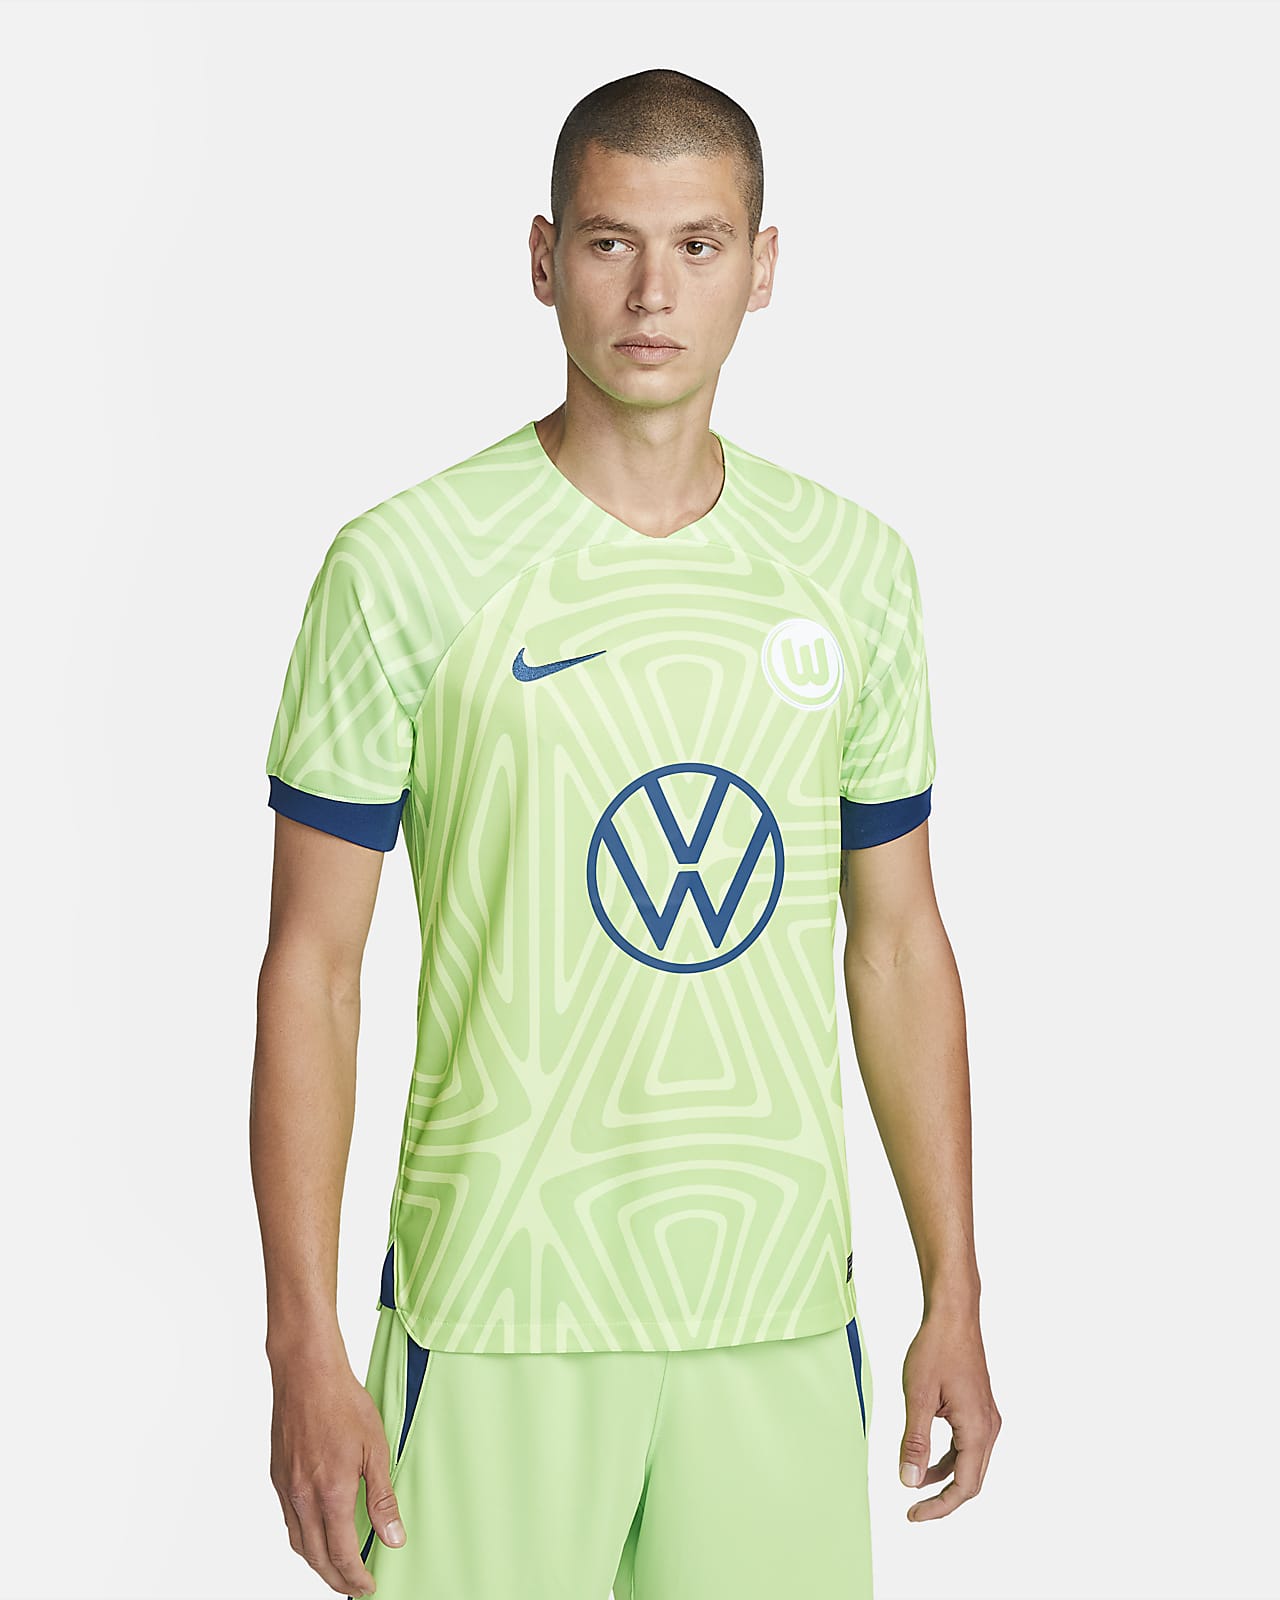 VfL Wolfsburg 2022/23 Stadium Thuis Nike voetbalshirt met Dri-FIT voor heren